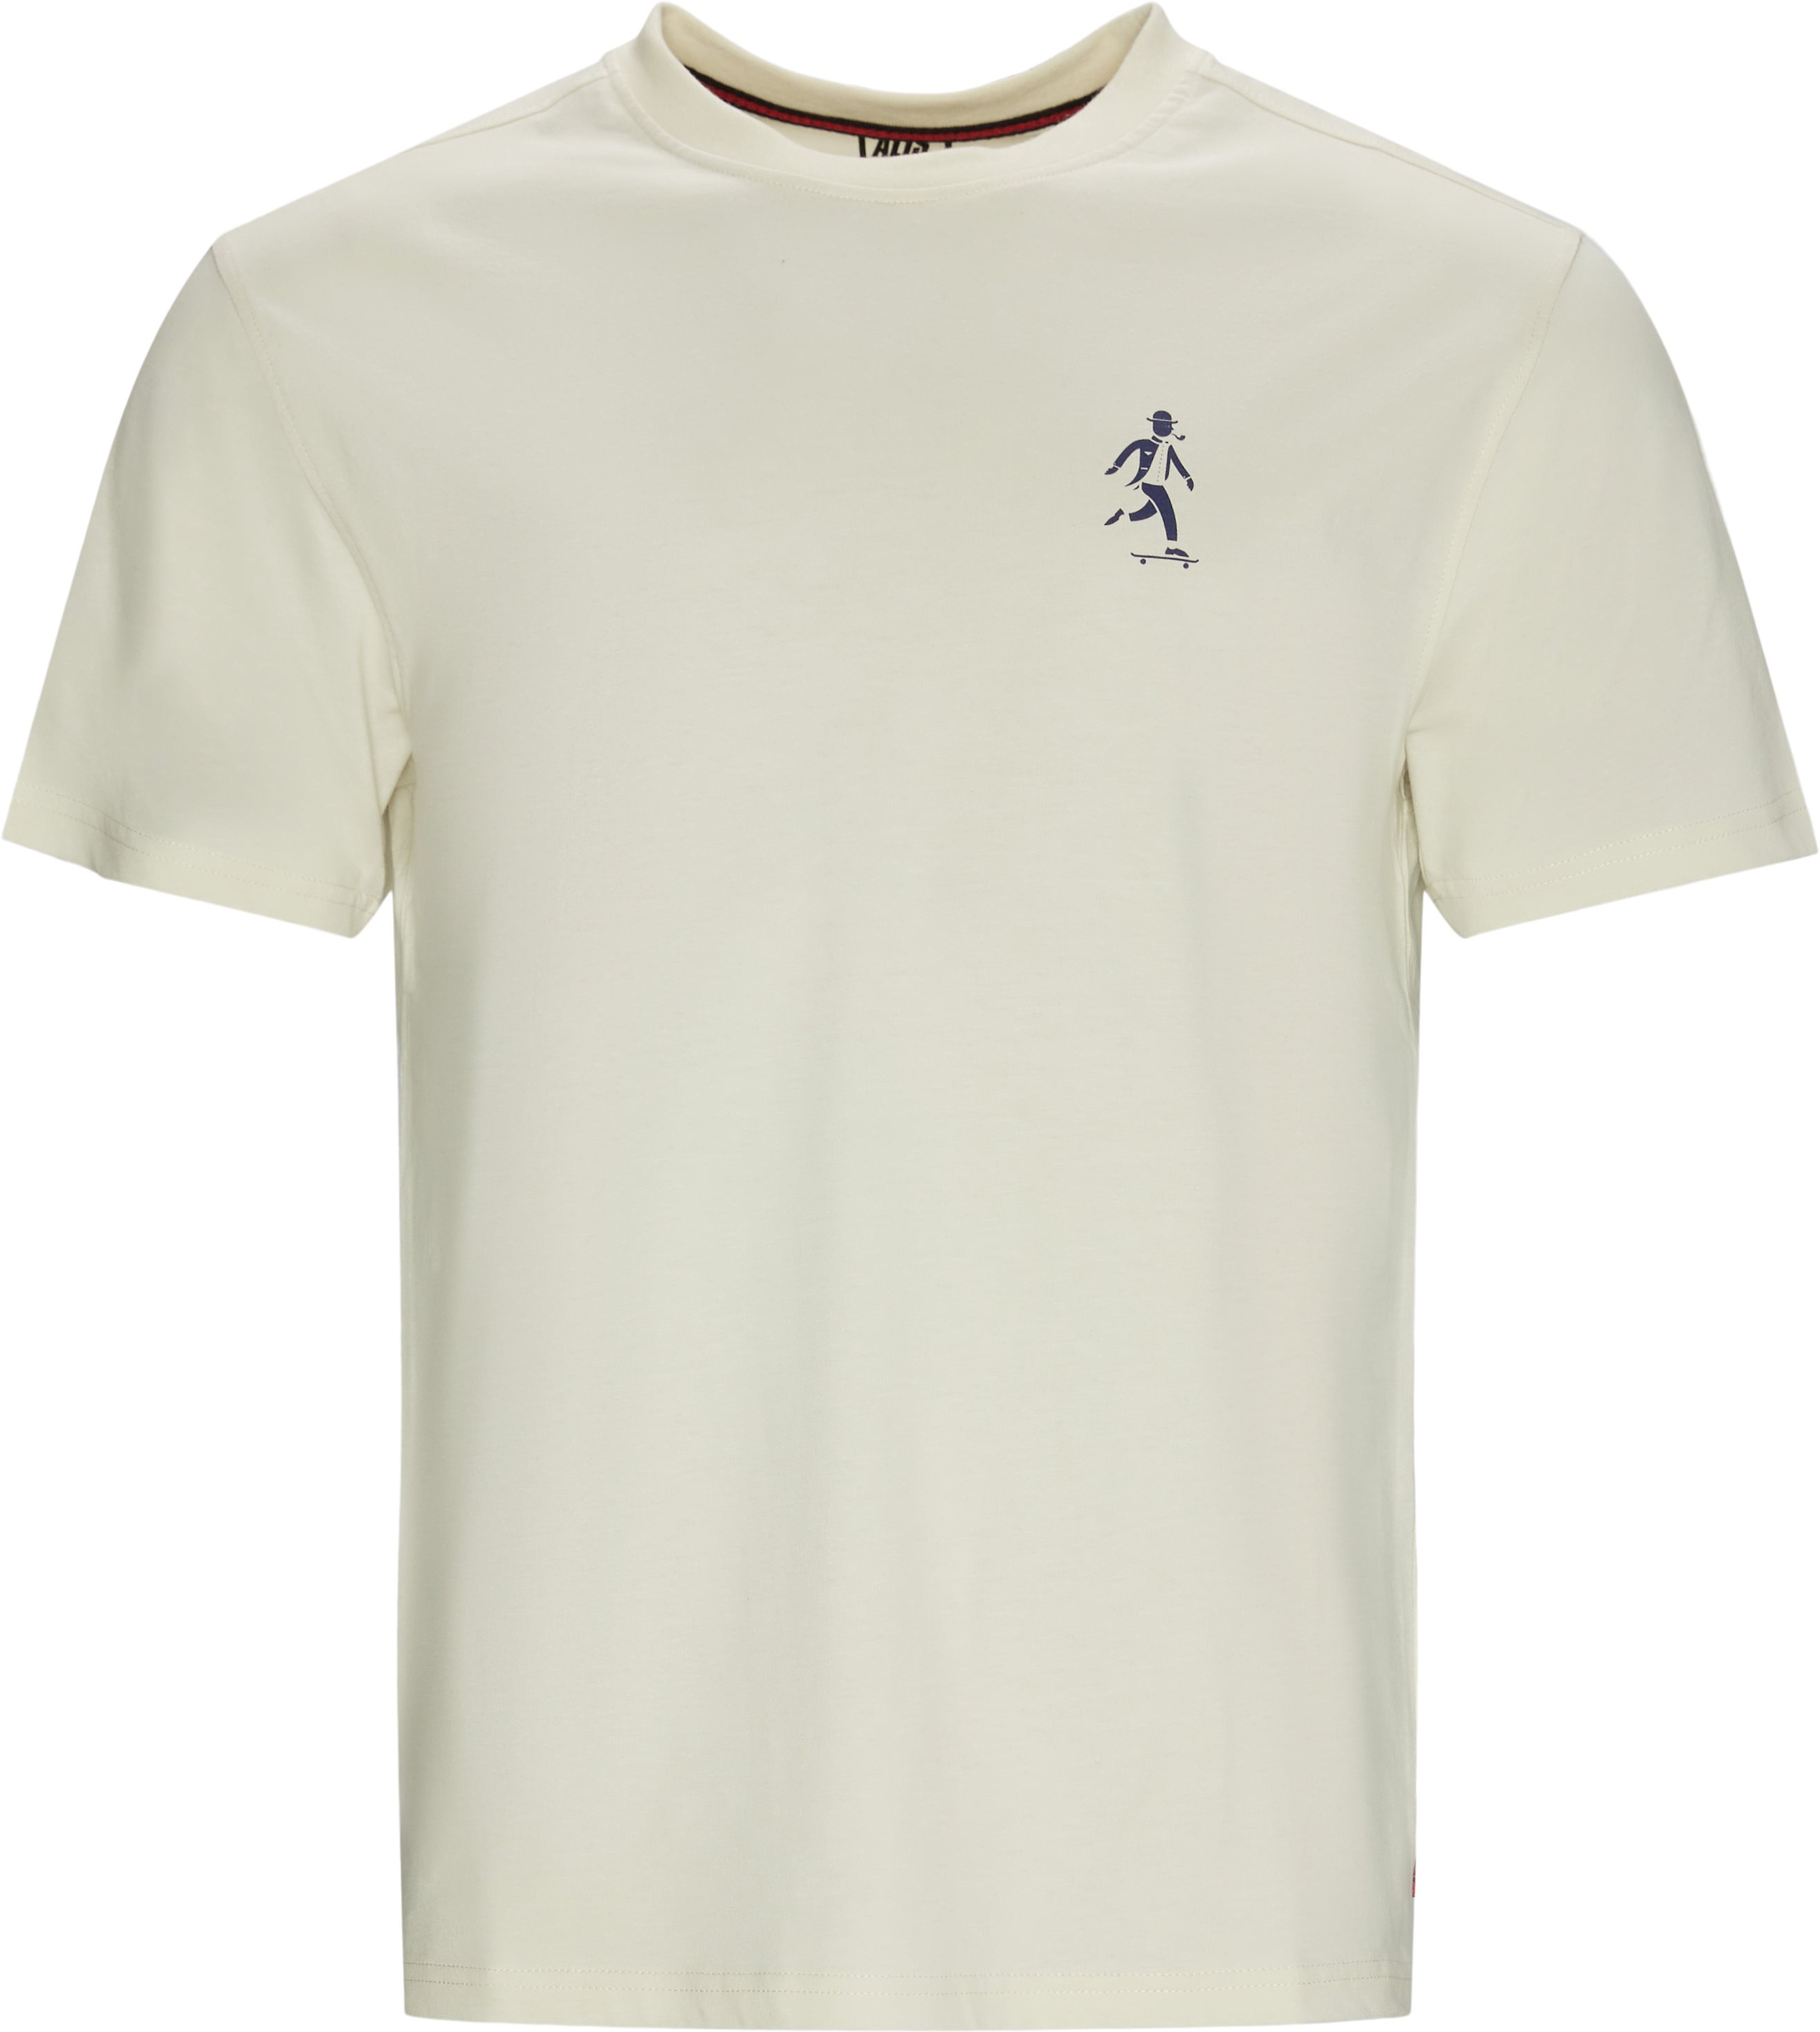 Gentleman Miniature Tee - T-shirts - Regular fit - Hvid